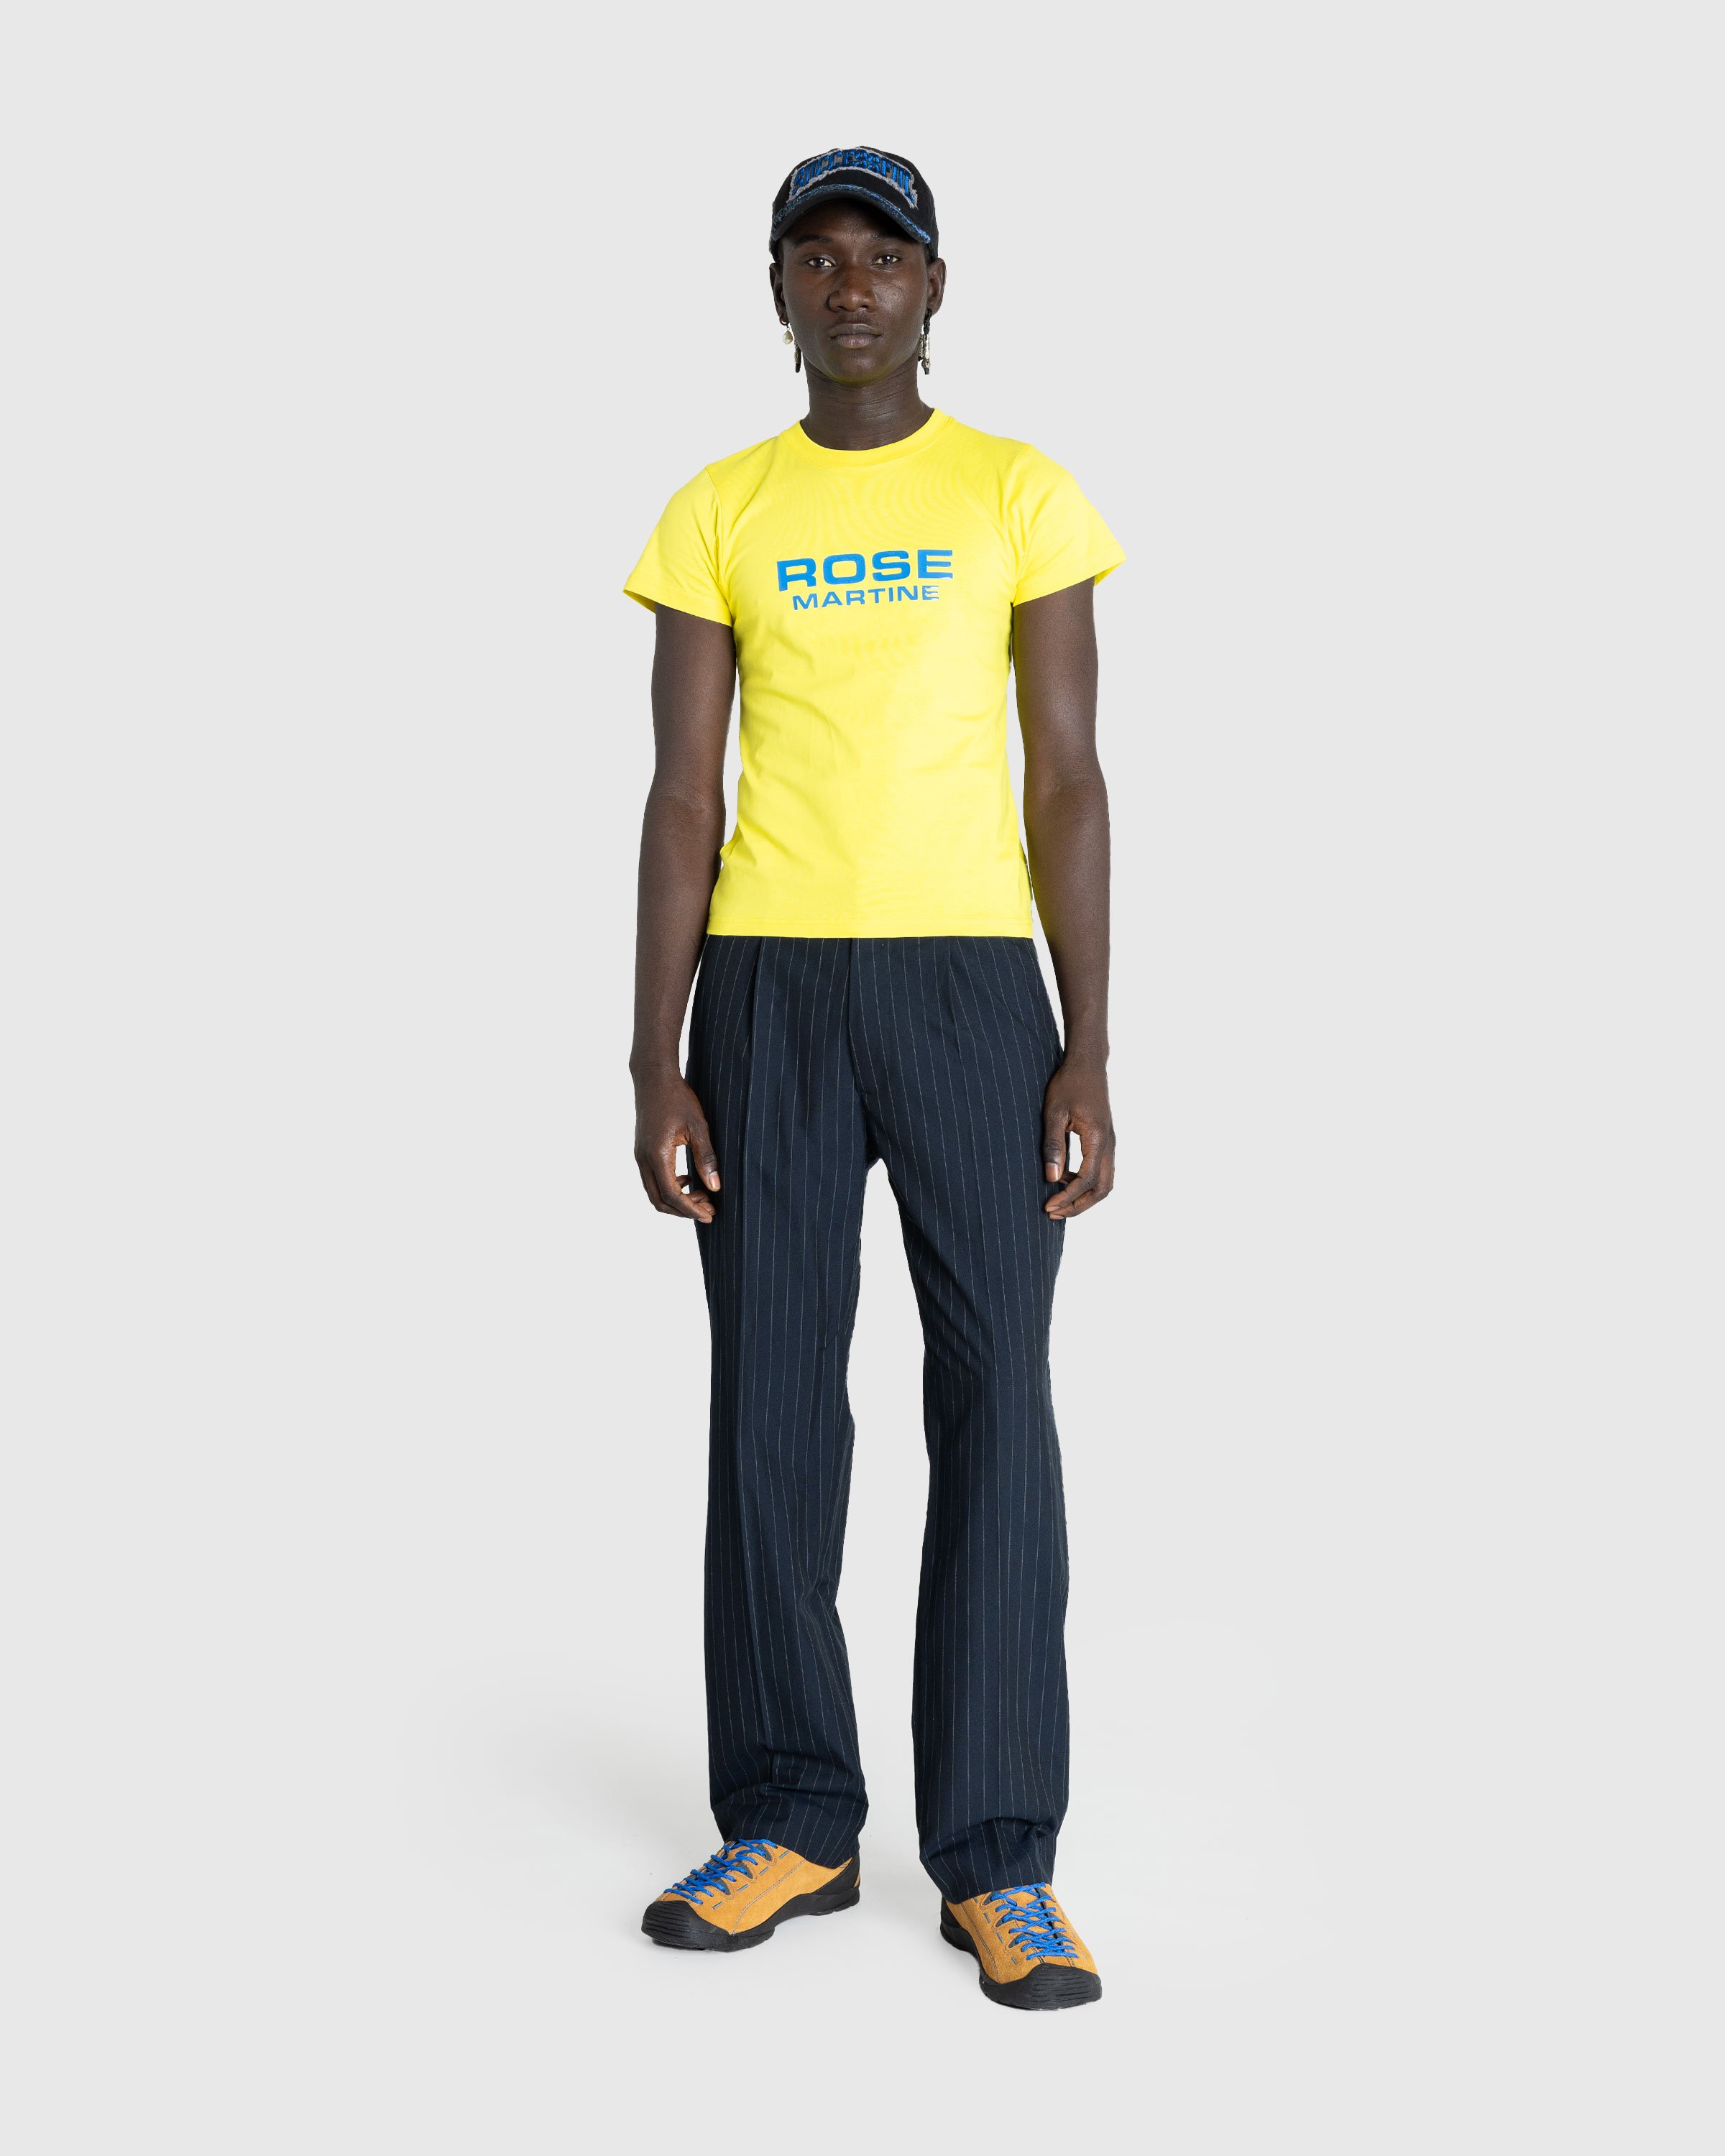 Martine Rose - Shrunken T-Shirt Acid Yellow - Clothing - Yellow - Image 3